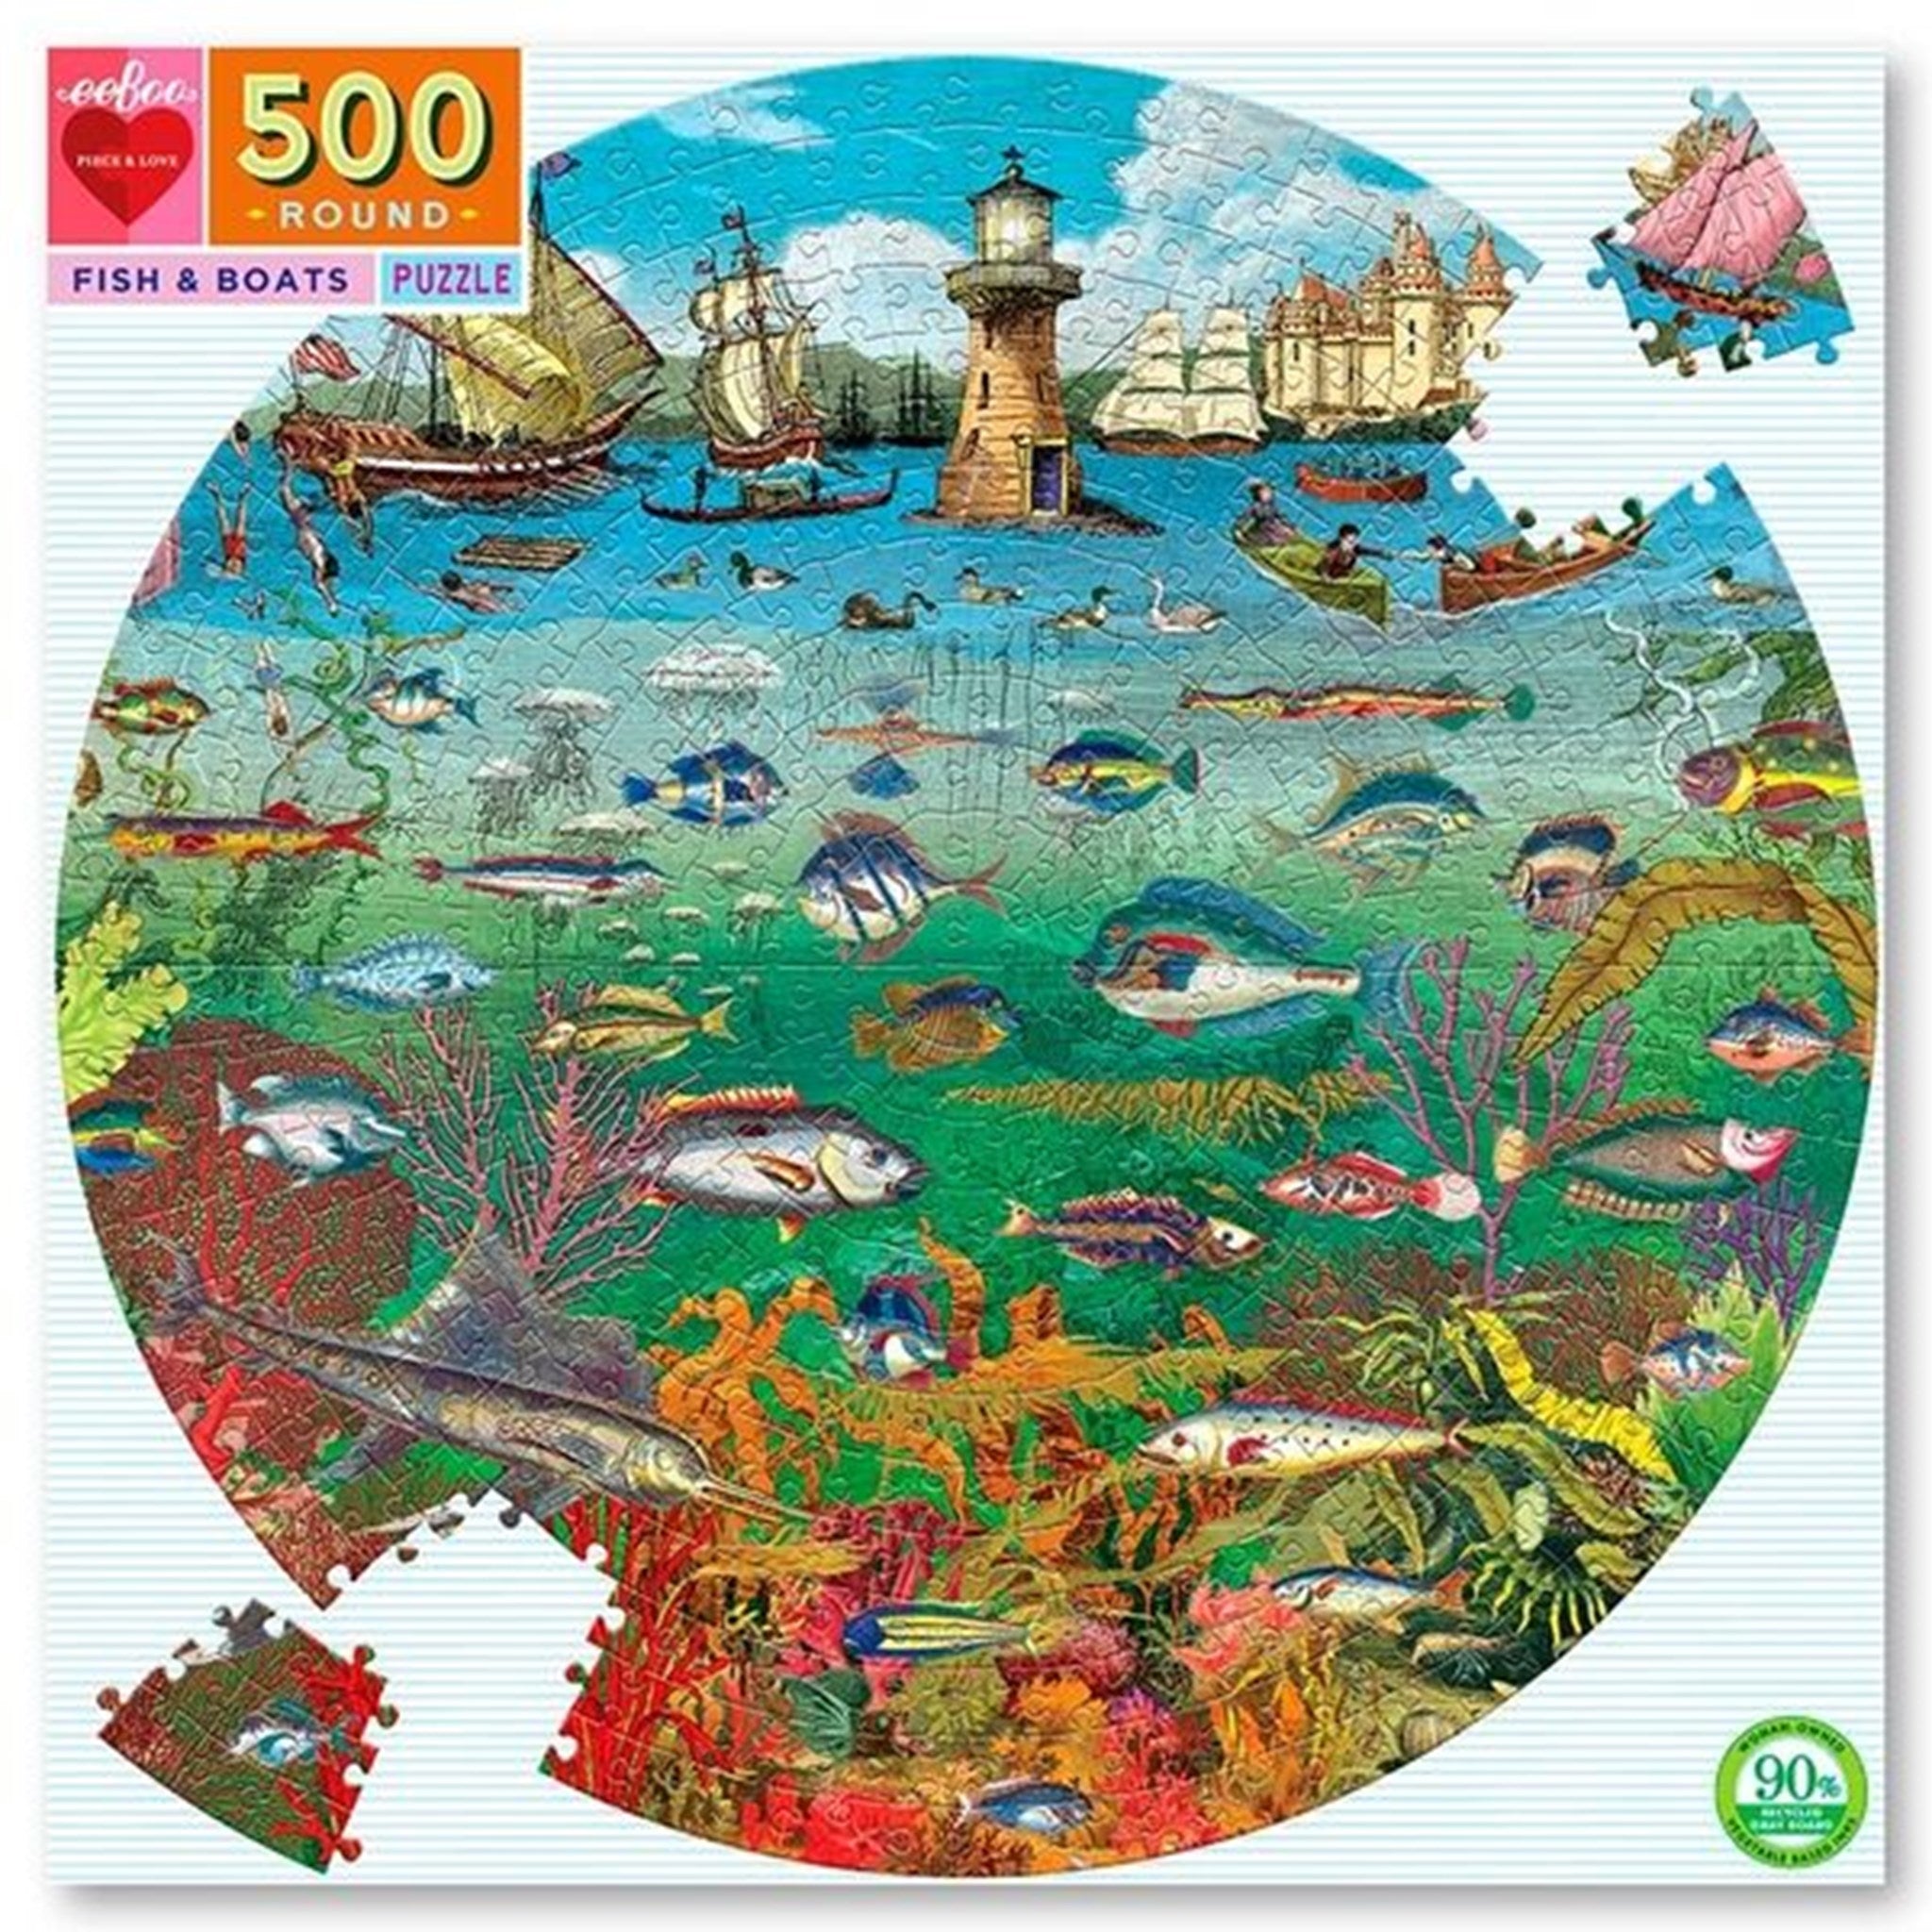 Eeboo Puzzle 500 Pieces - Fish and Boats